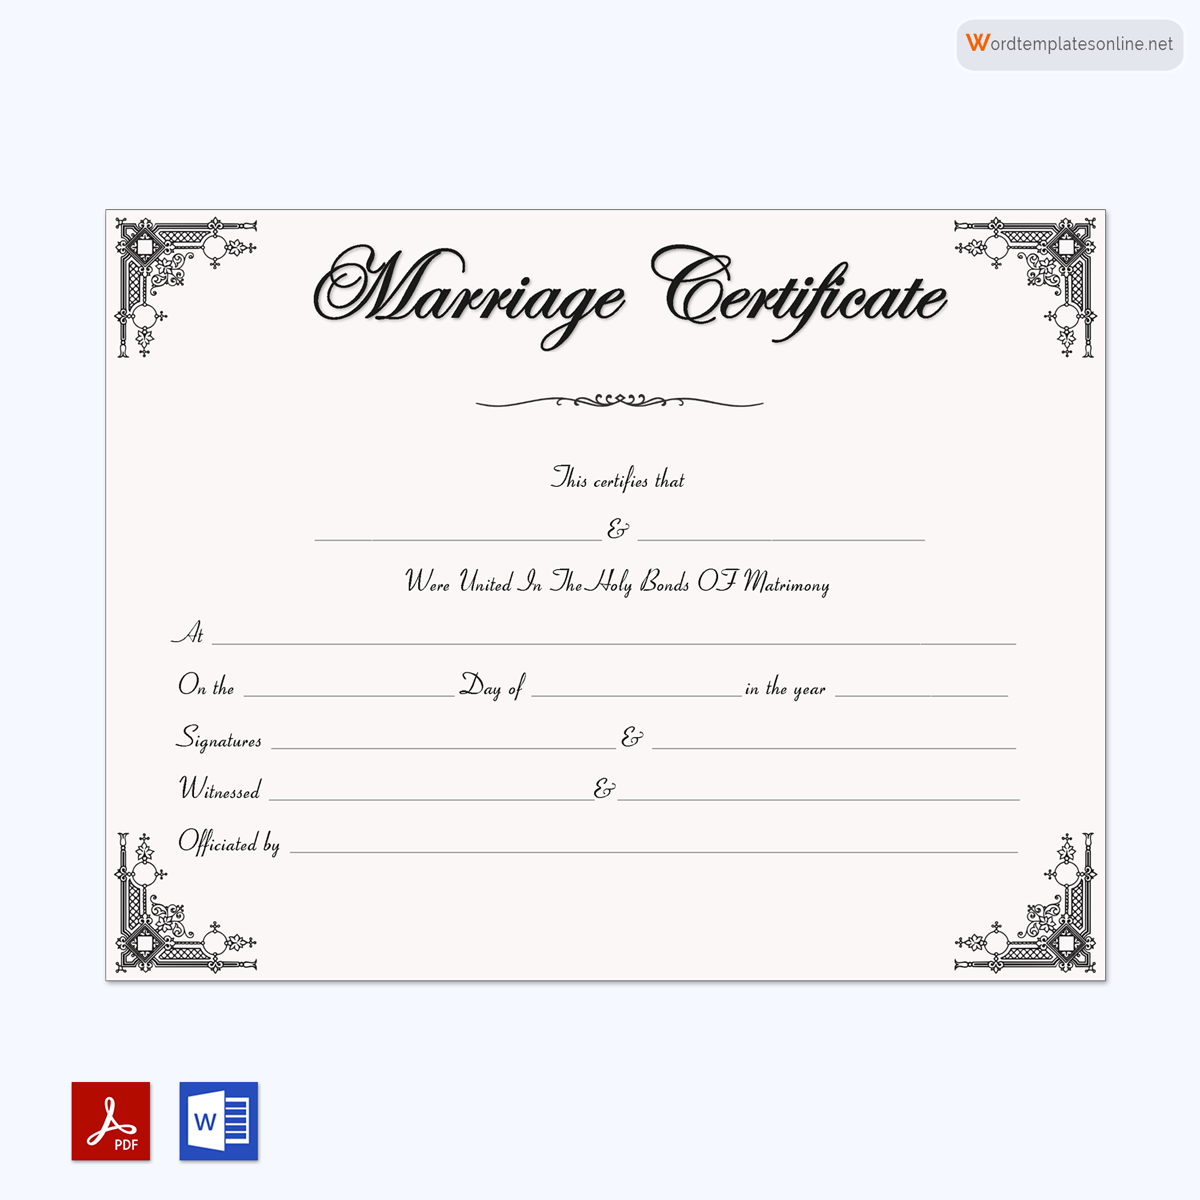  marriage certificate online fake free fake marriage certificate maker marriage certificate pdf download 41